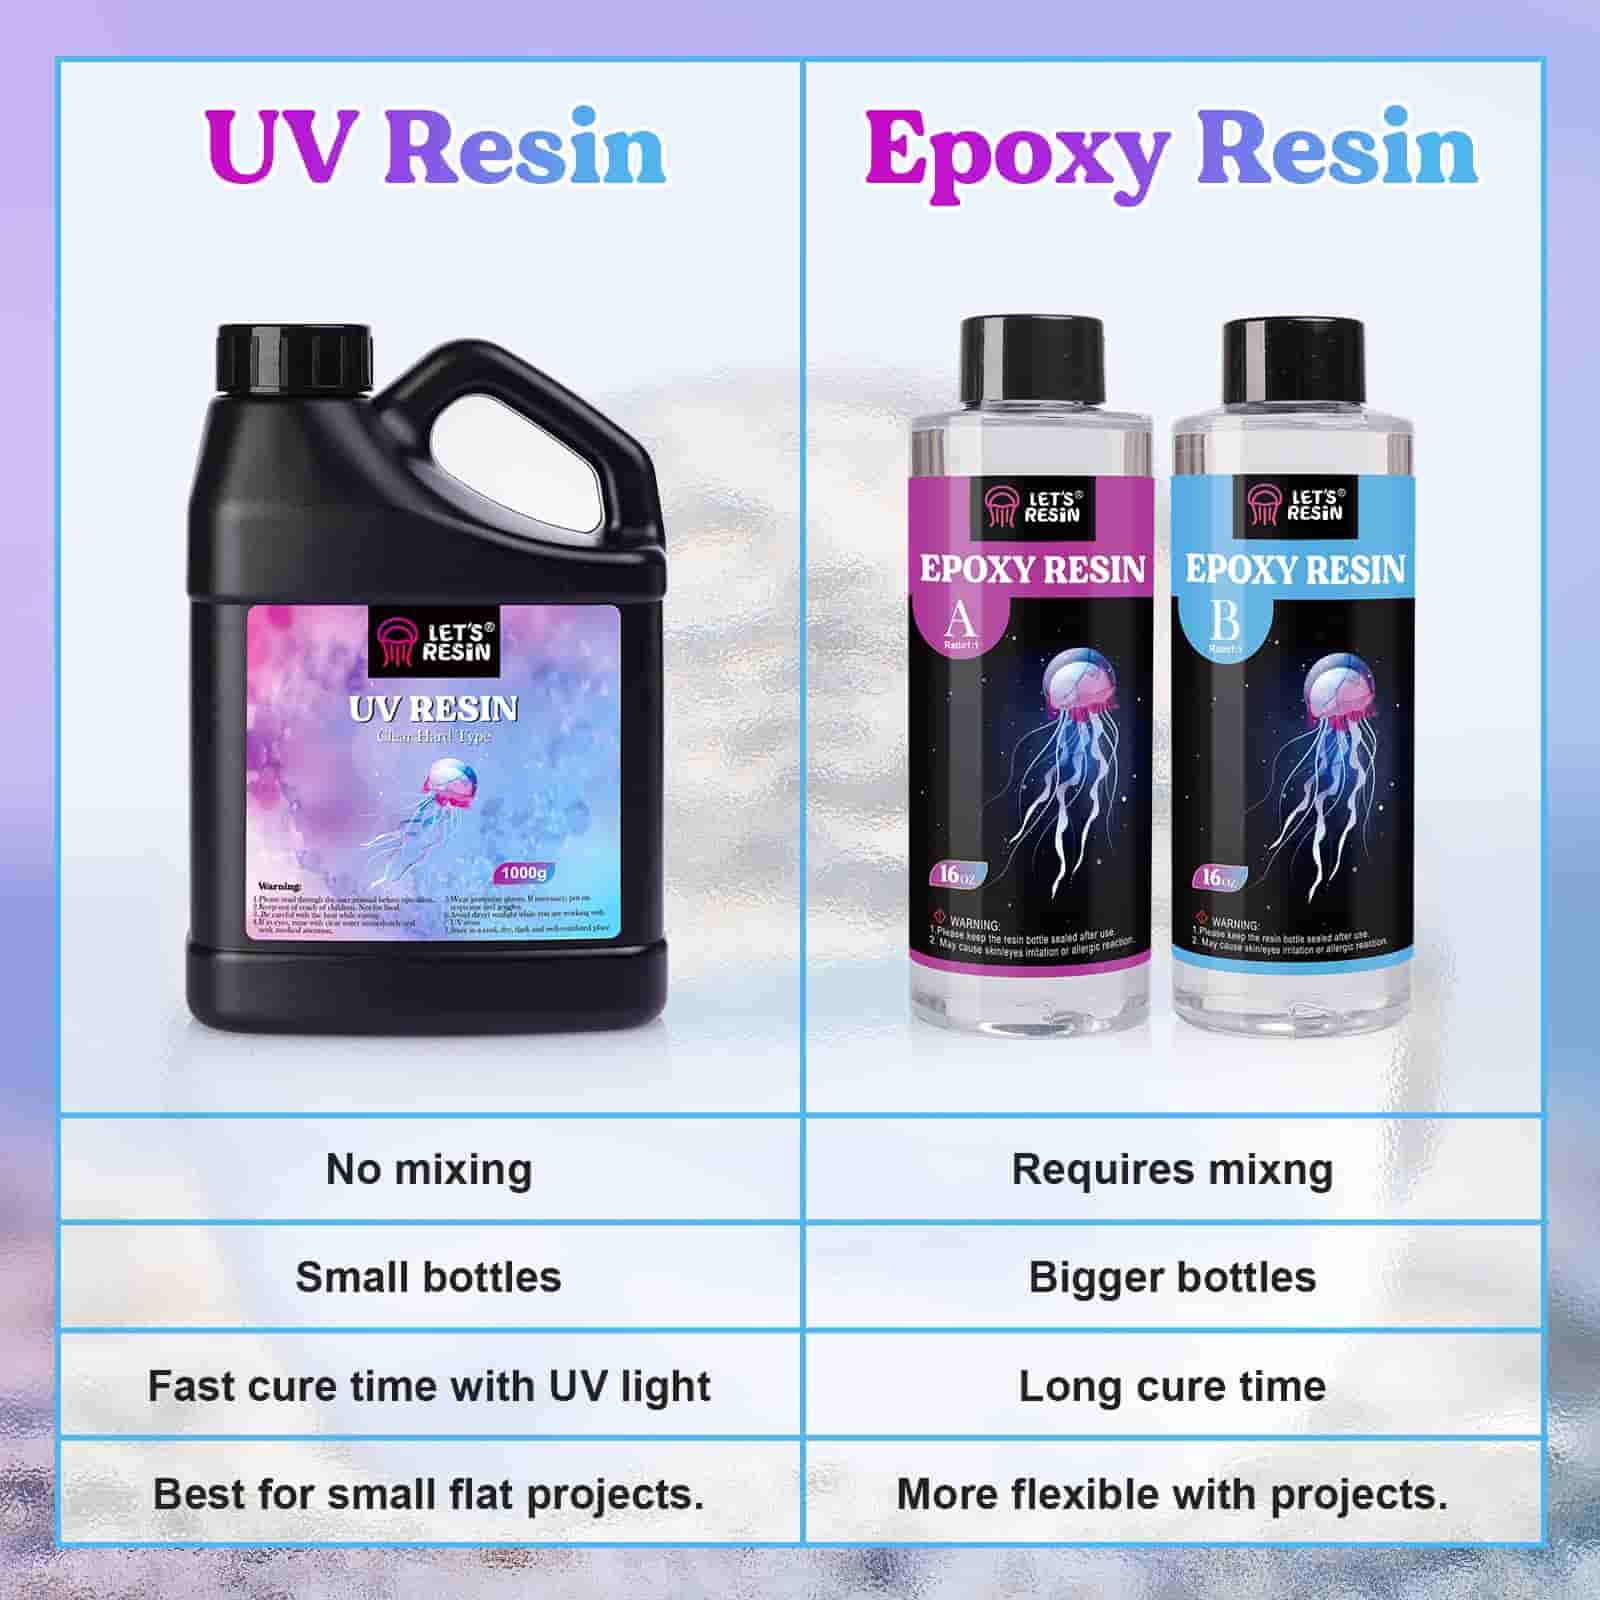 UV Resin LET'S RESIN UV LED Resin,Crystal Clear Nigeria